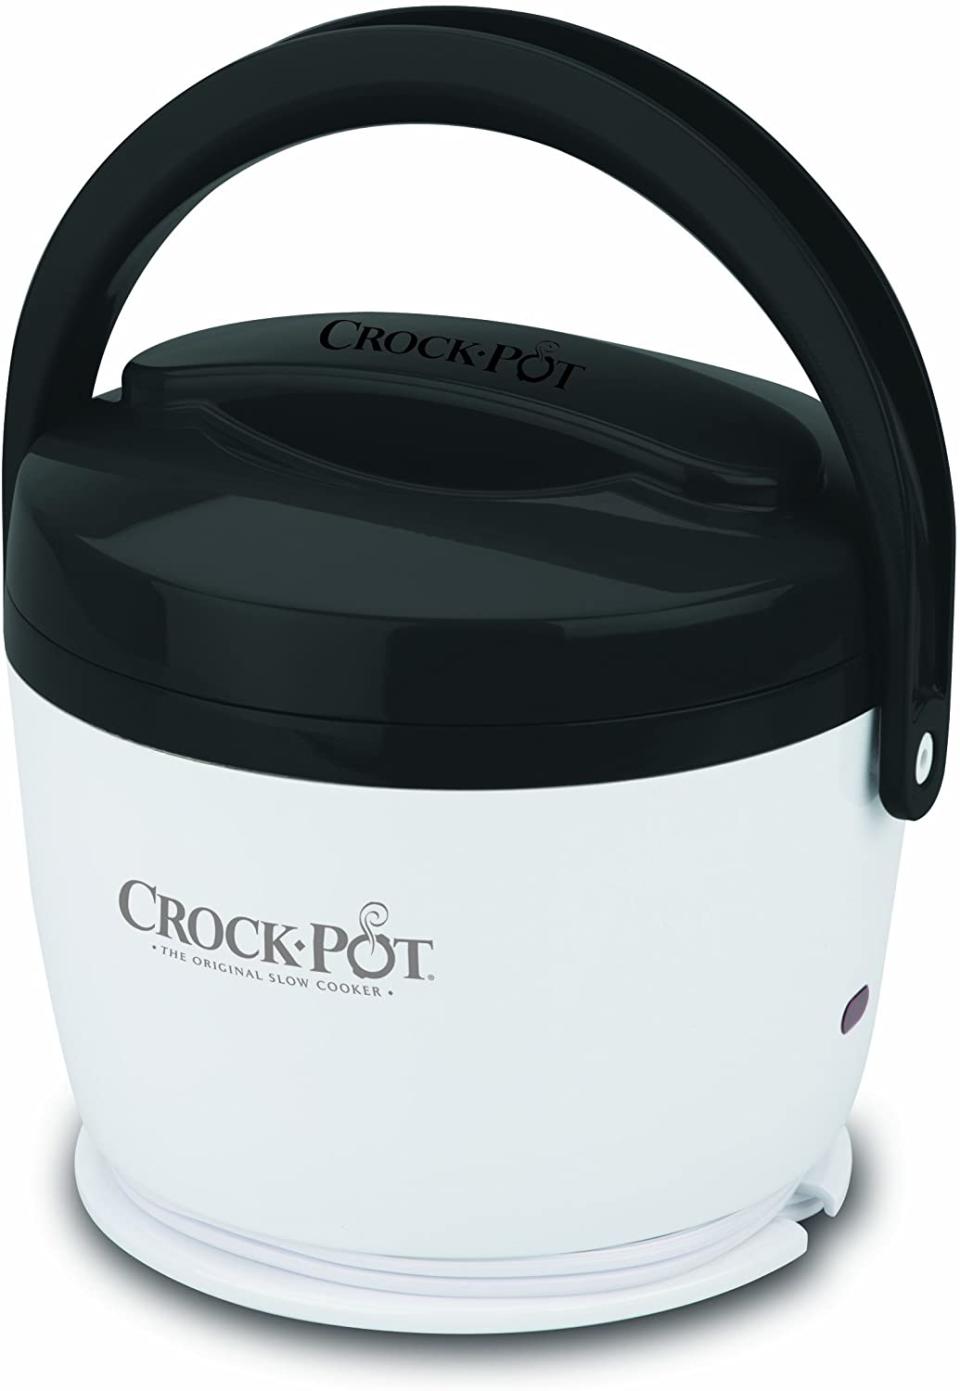 Crock-Pot Lunch Crock Warmer. Image via Amazon.